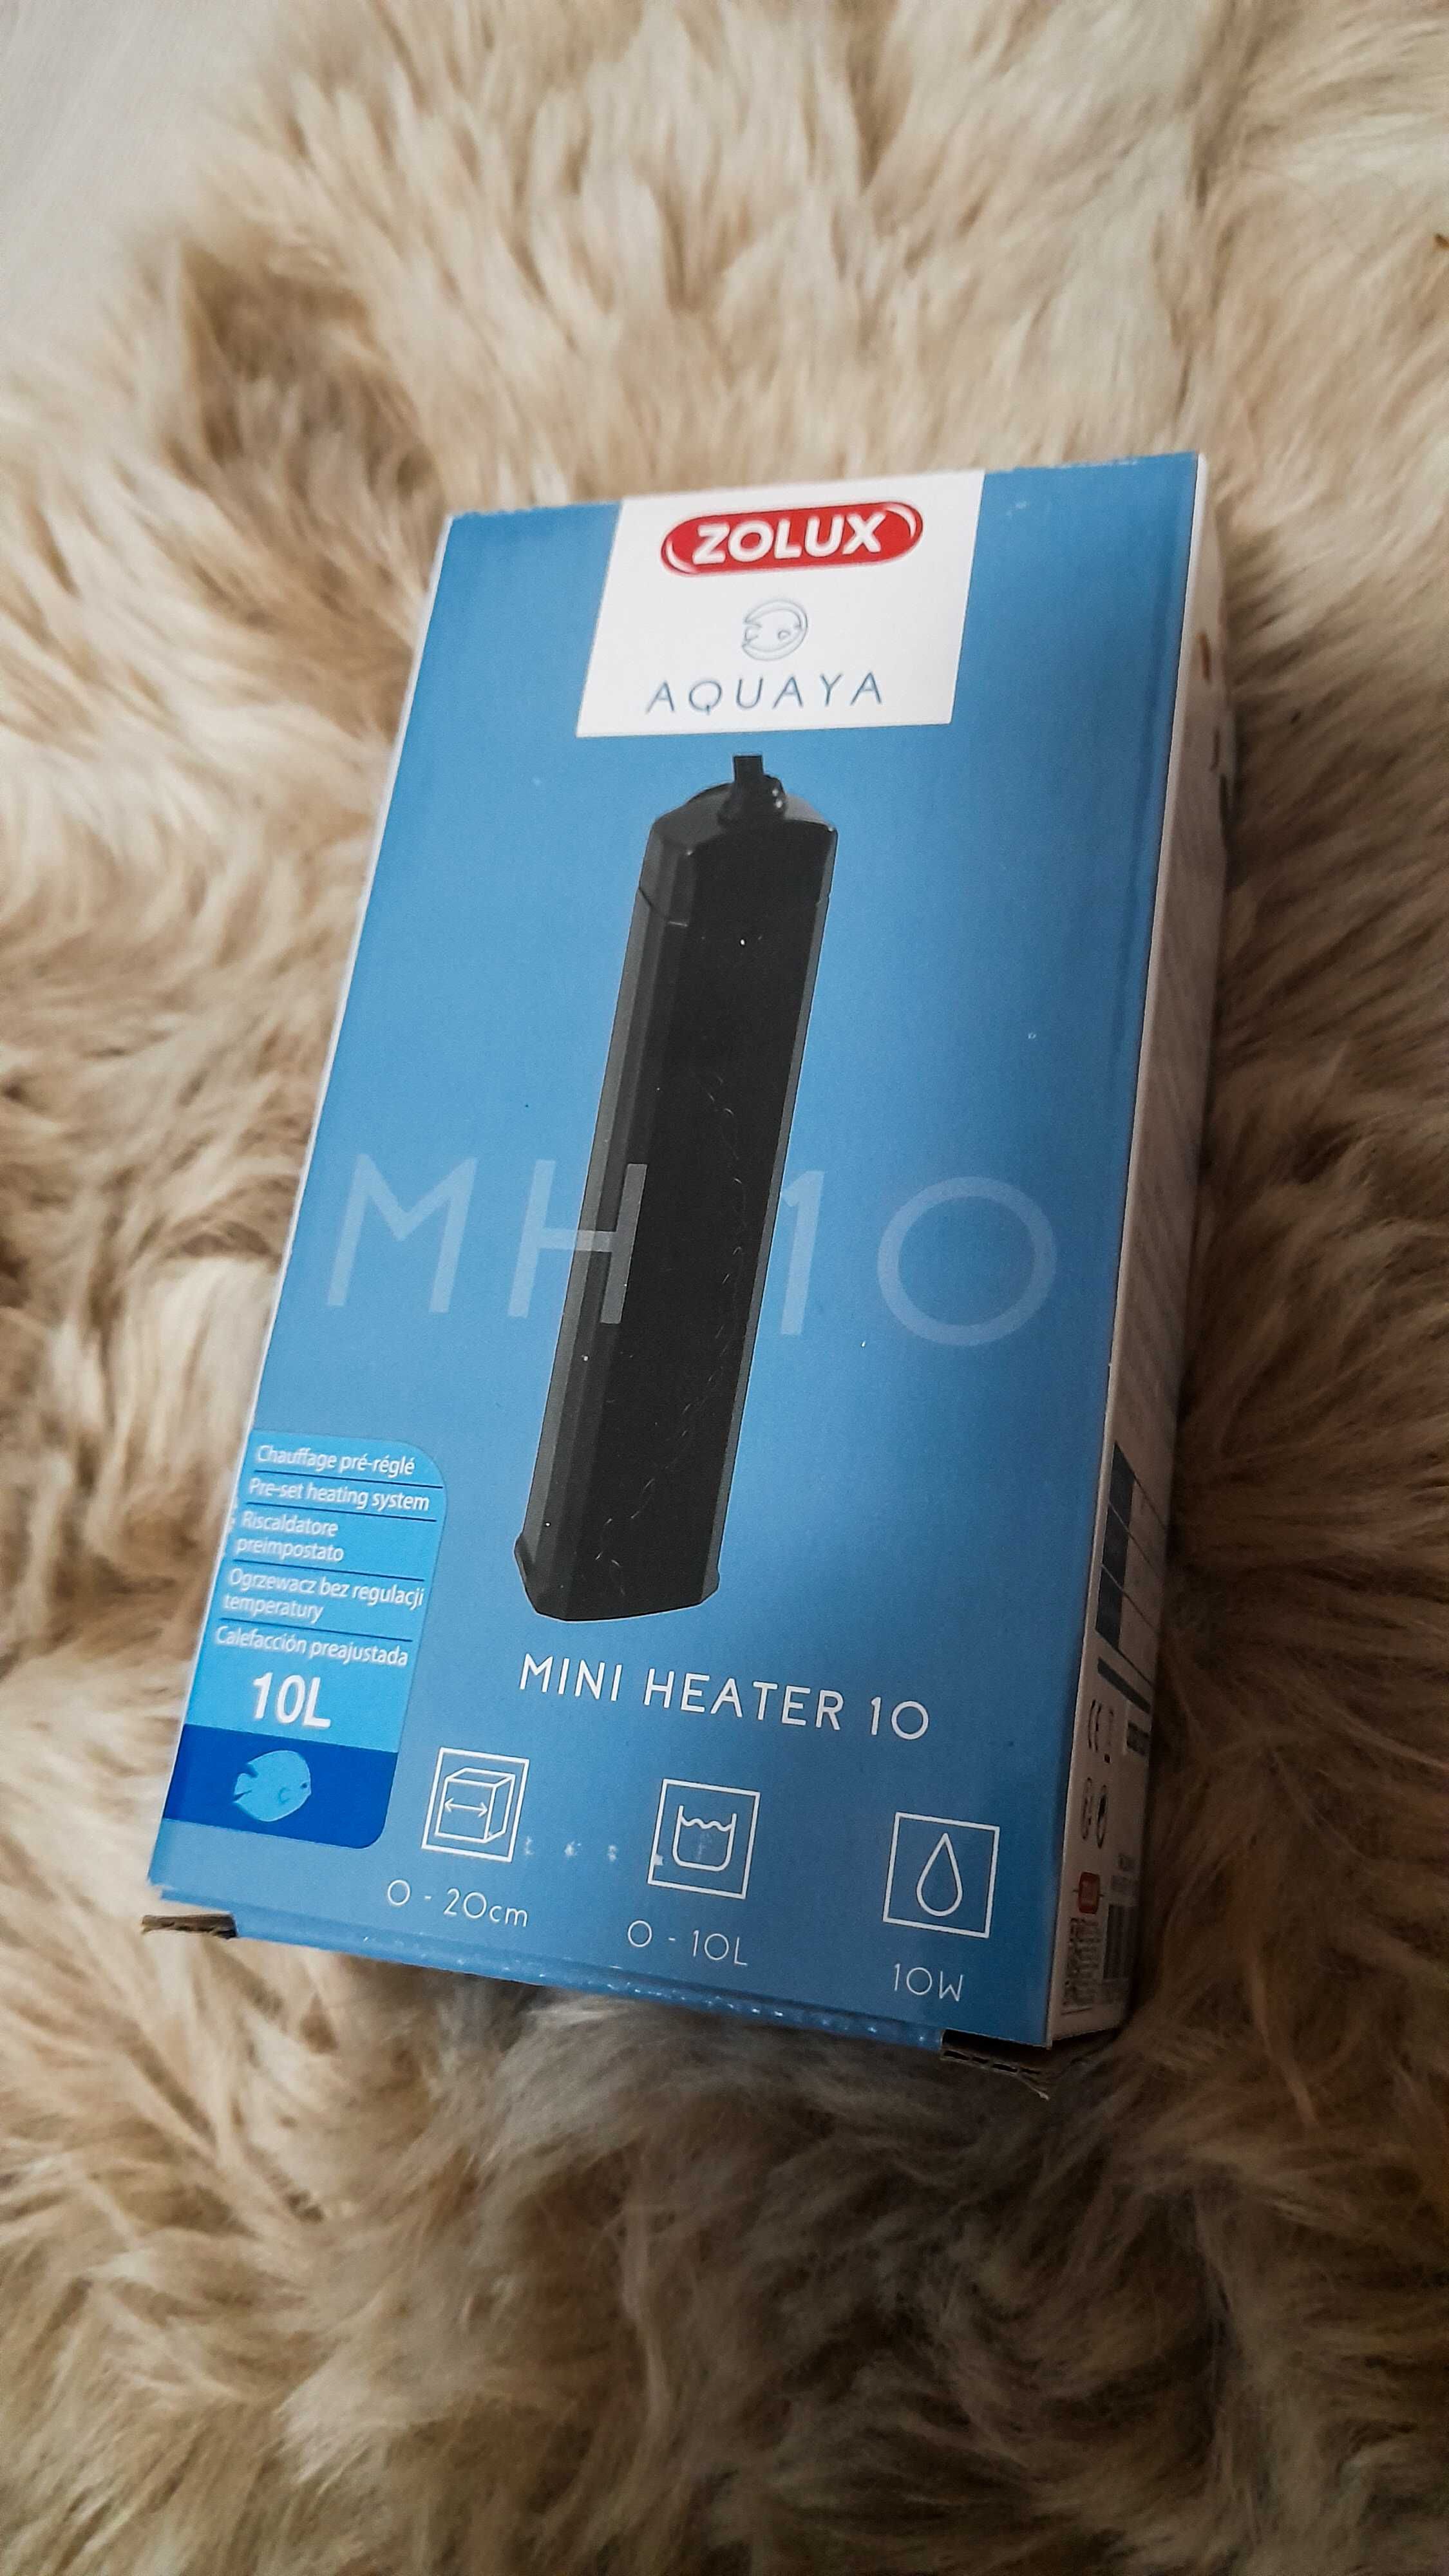 Zolux Aquaya Mini Heater 10